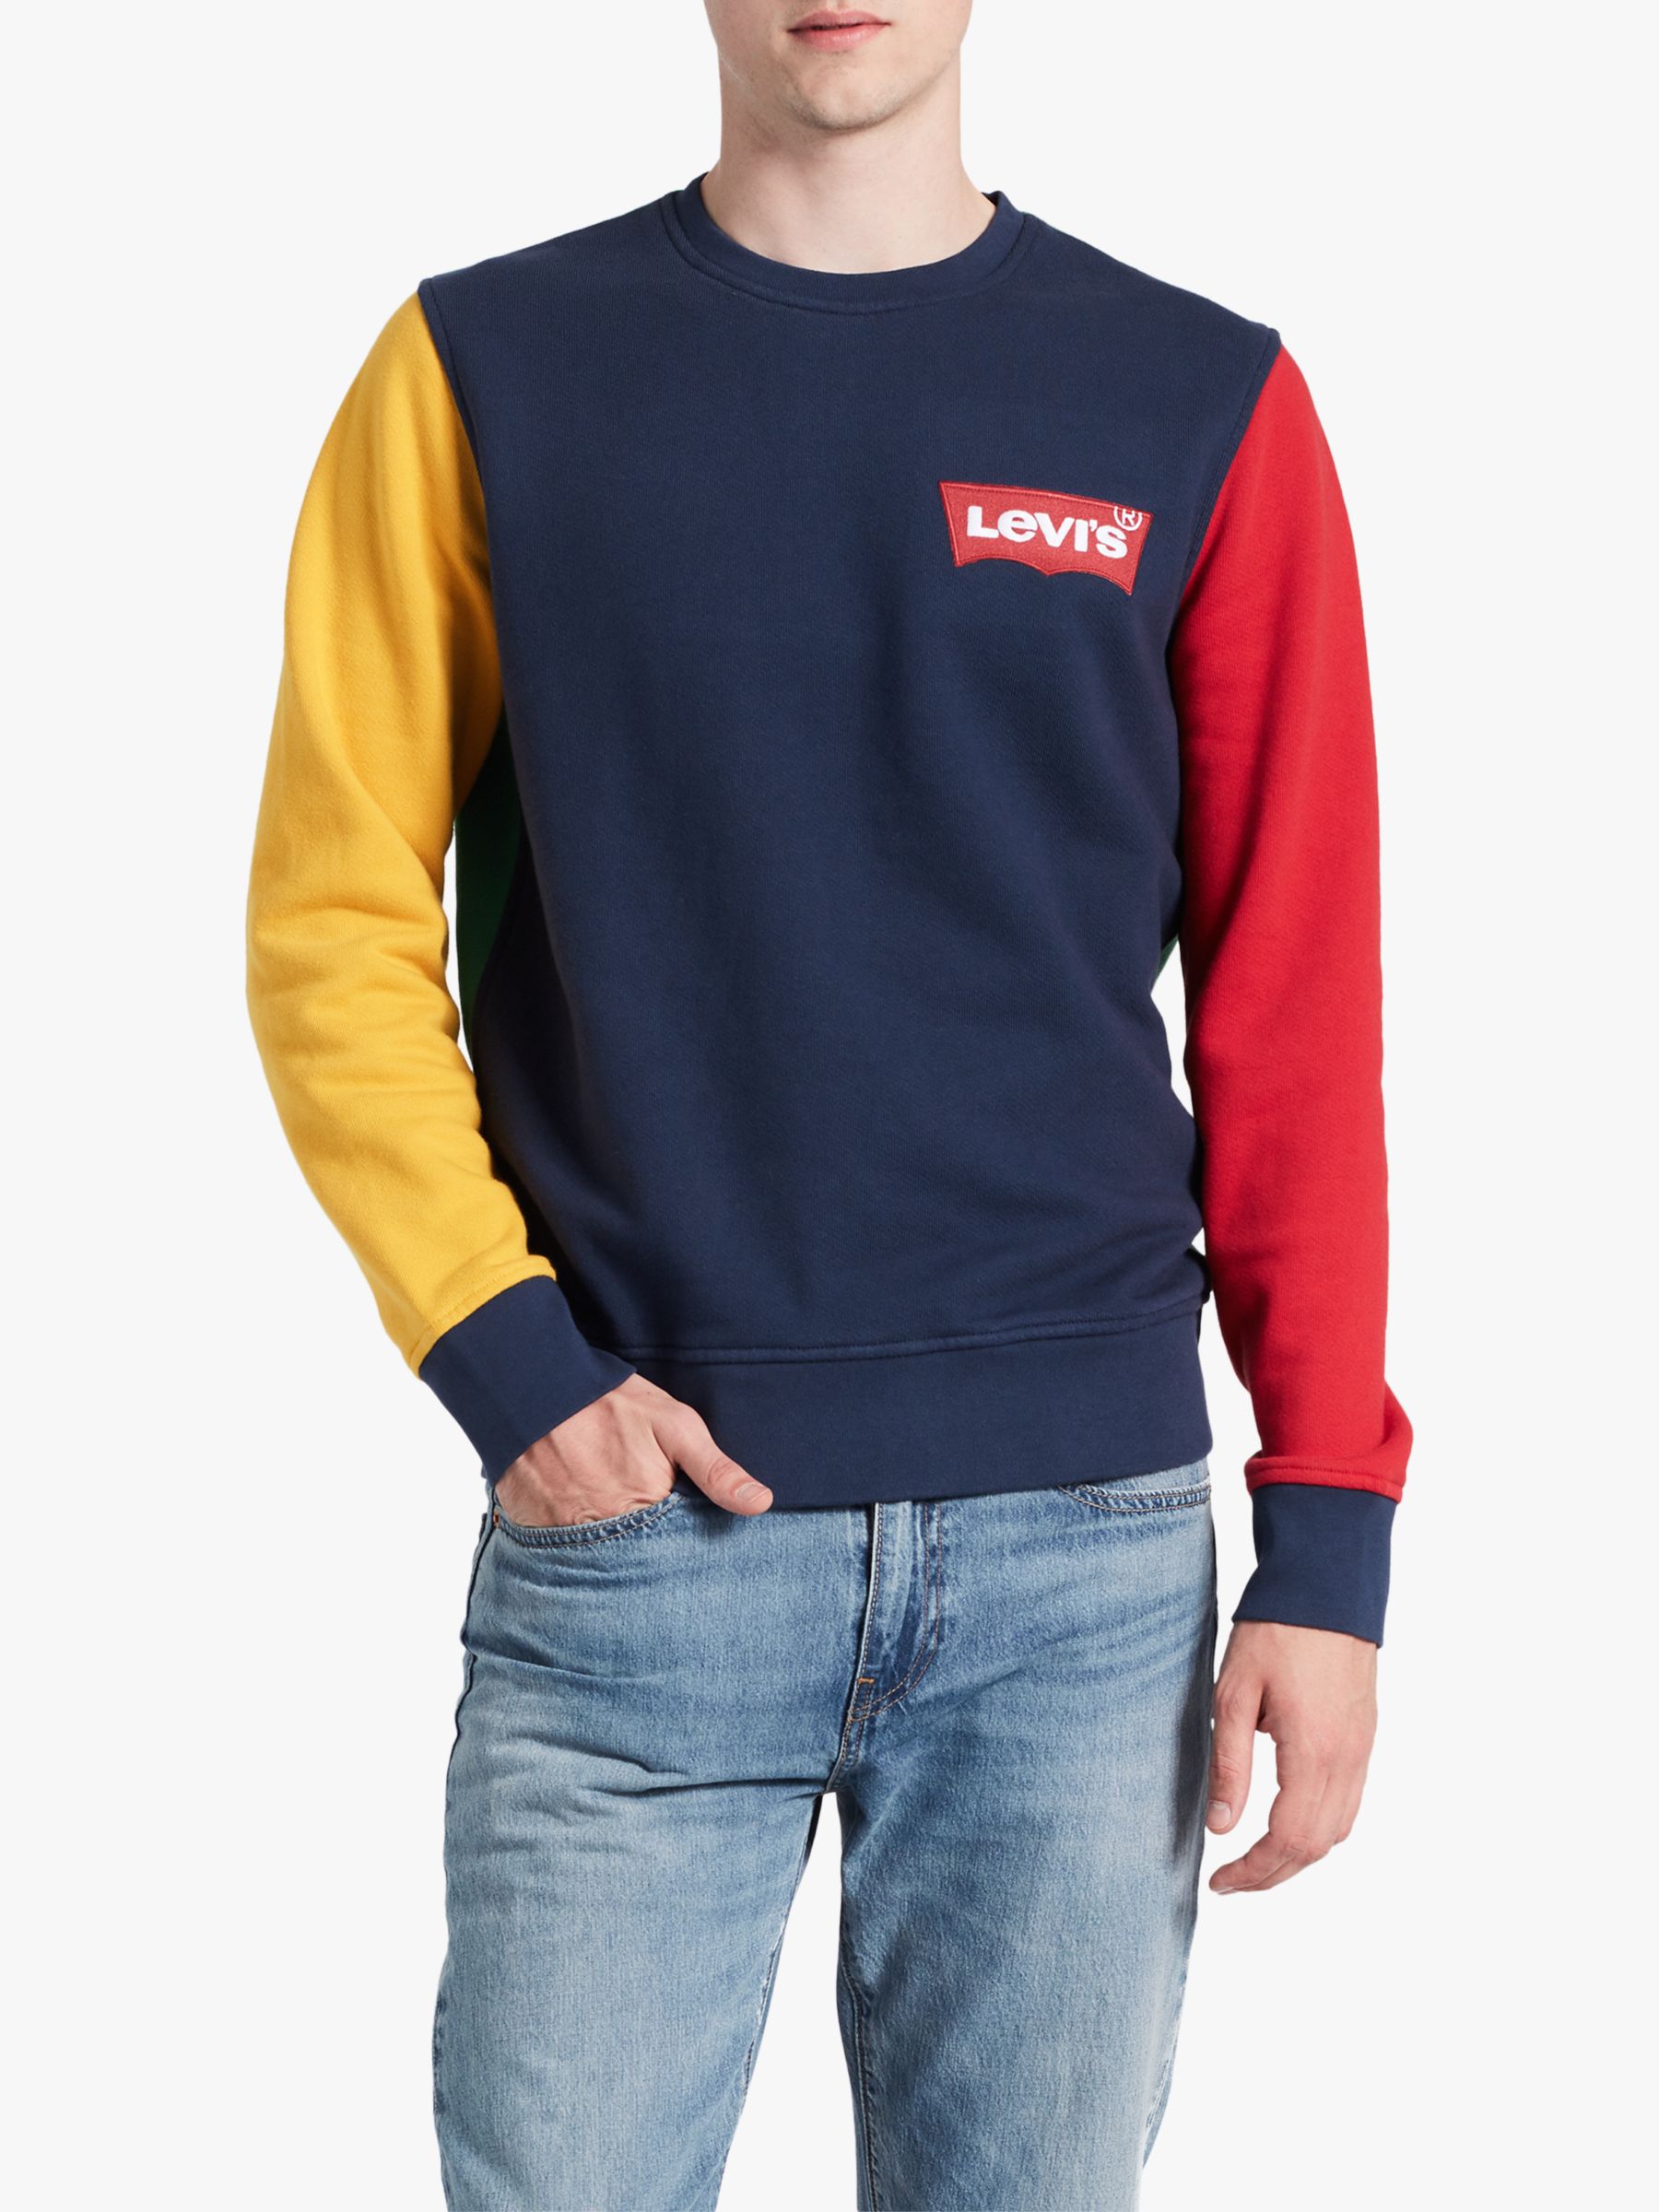 levi's colour block hoodie